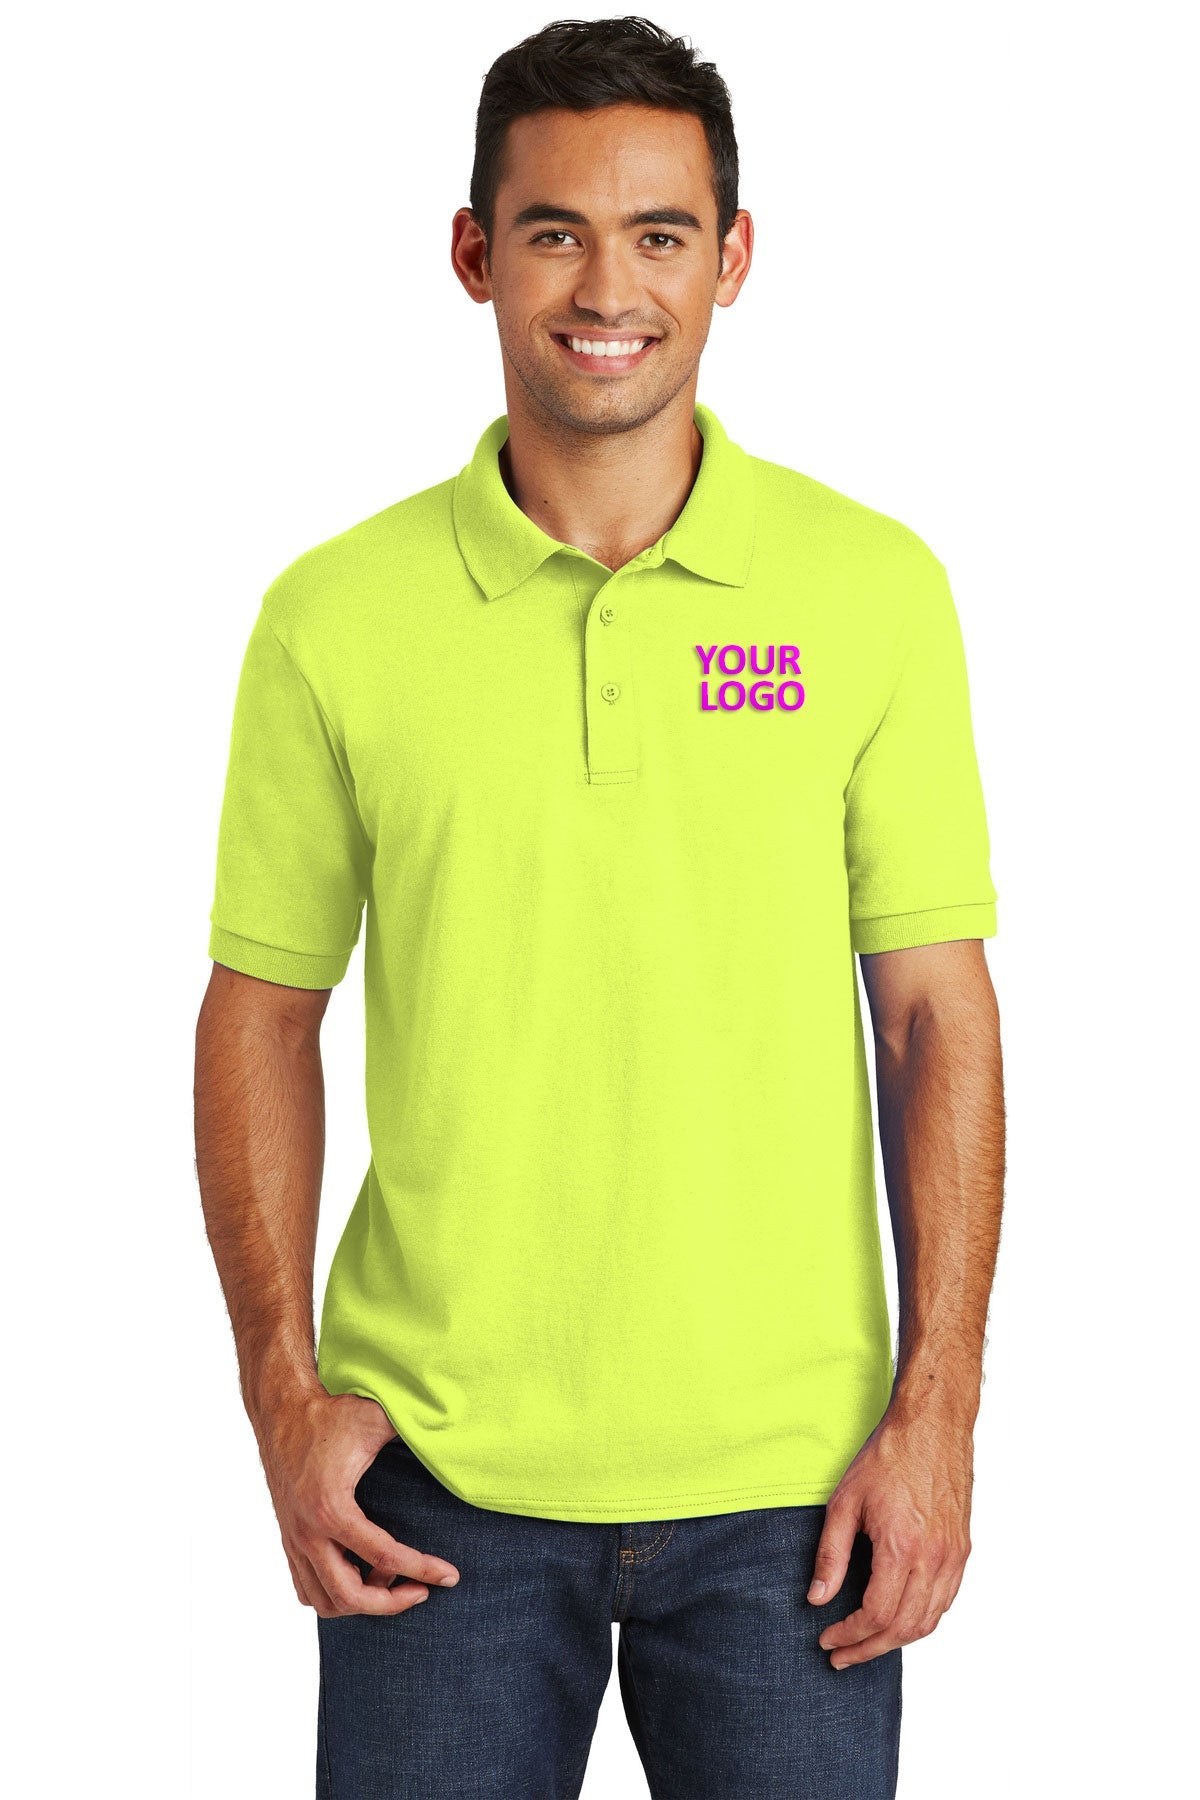 port & company safety green kp55 custom logo polo shirts embroidered